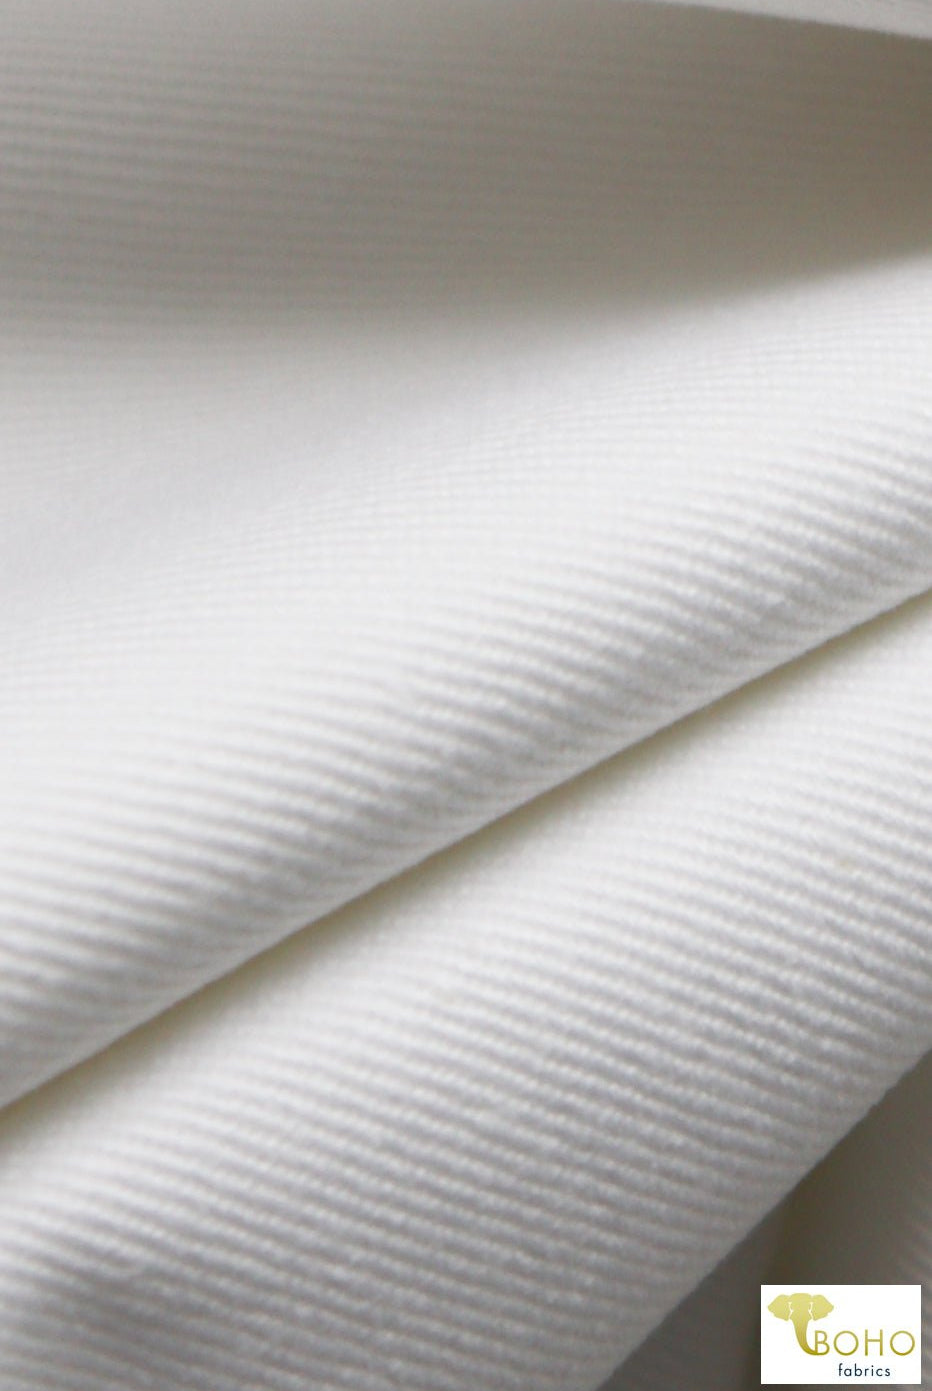 Creamy White, Twill Woven - Boho Fabrics